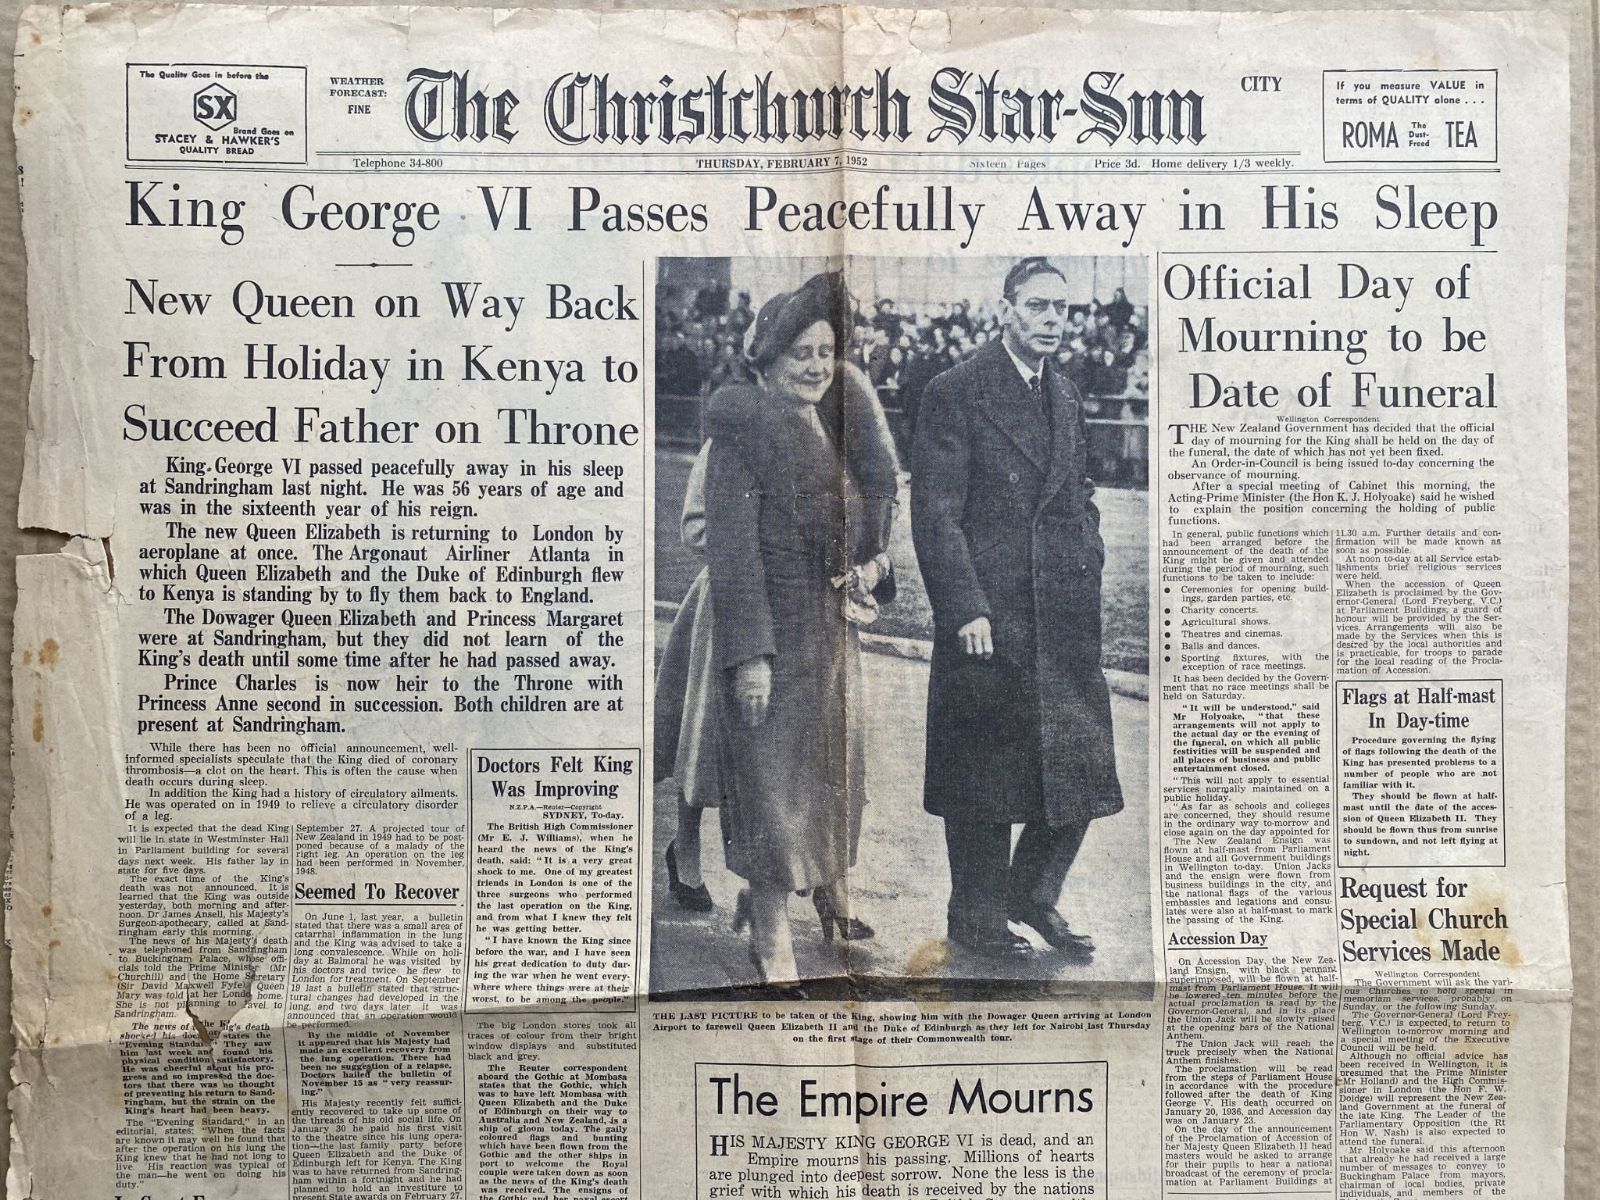 OLD NEWSPAPER: The Christchurch Star-Sun, 7 February 1952 - King George death